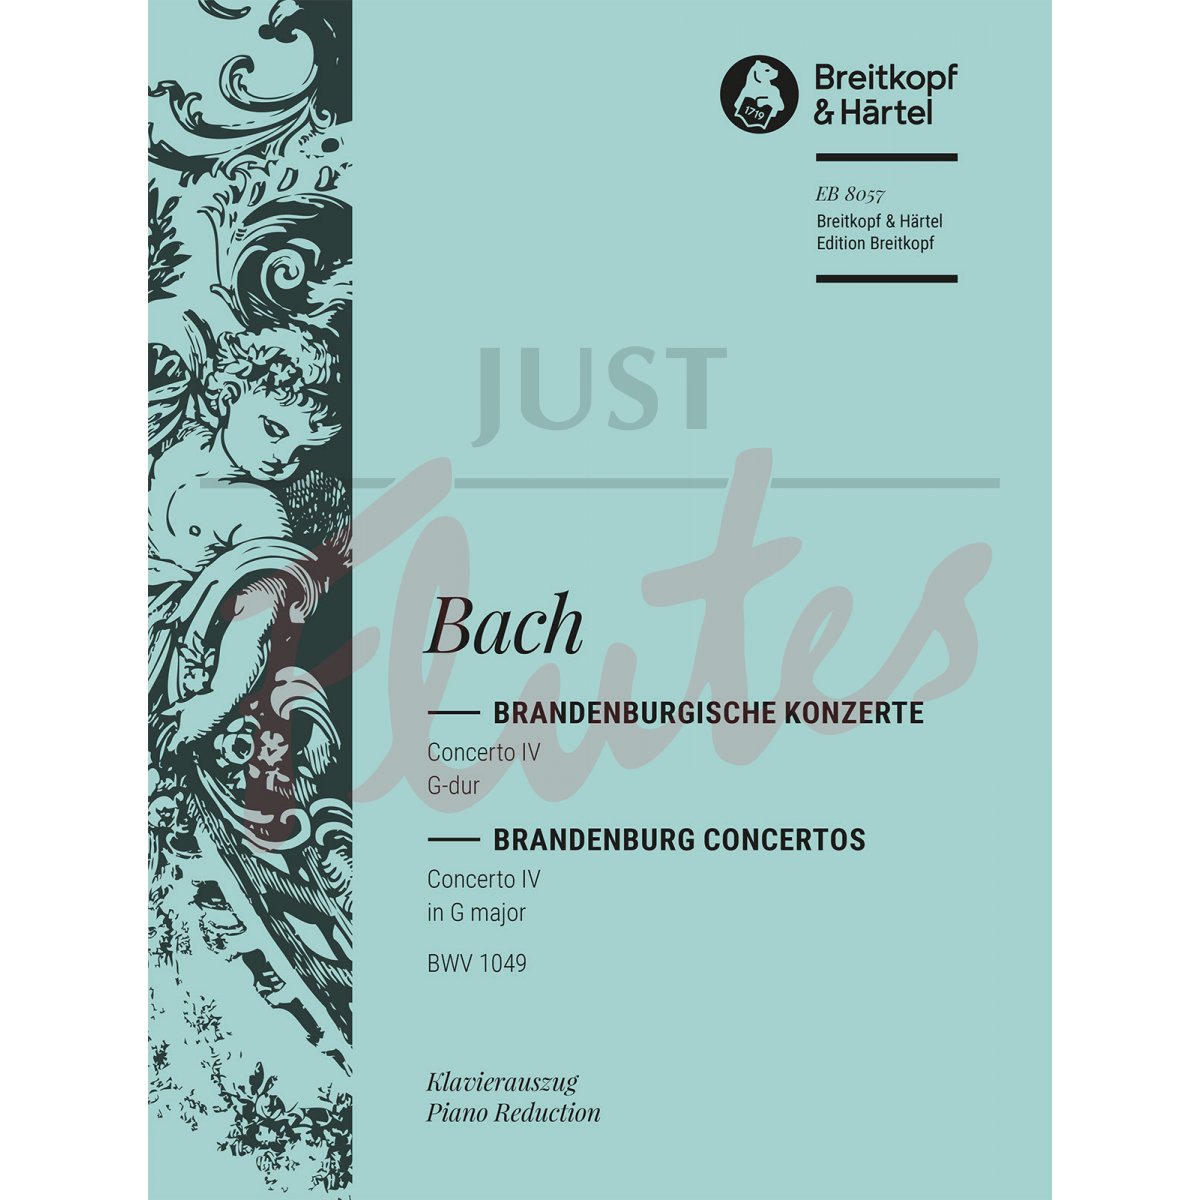 Brandenburg Concerto No. 4 in G major for Solo Violin, Two Flutes and Piano